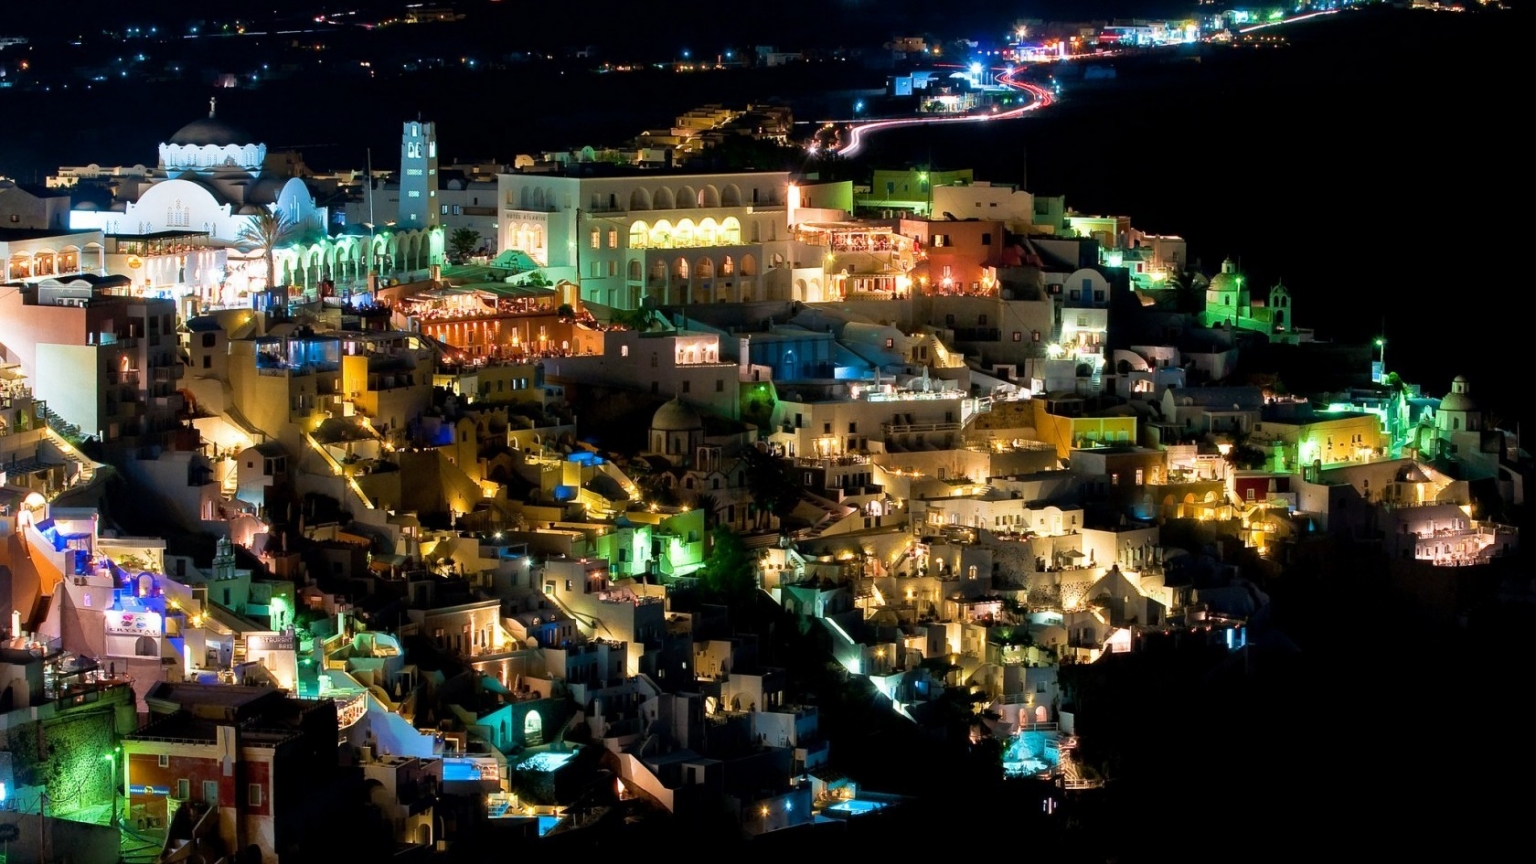 Santorini Night View for 1536 x 864 HDTV resolution